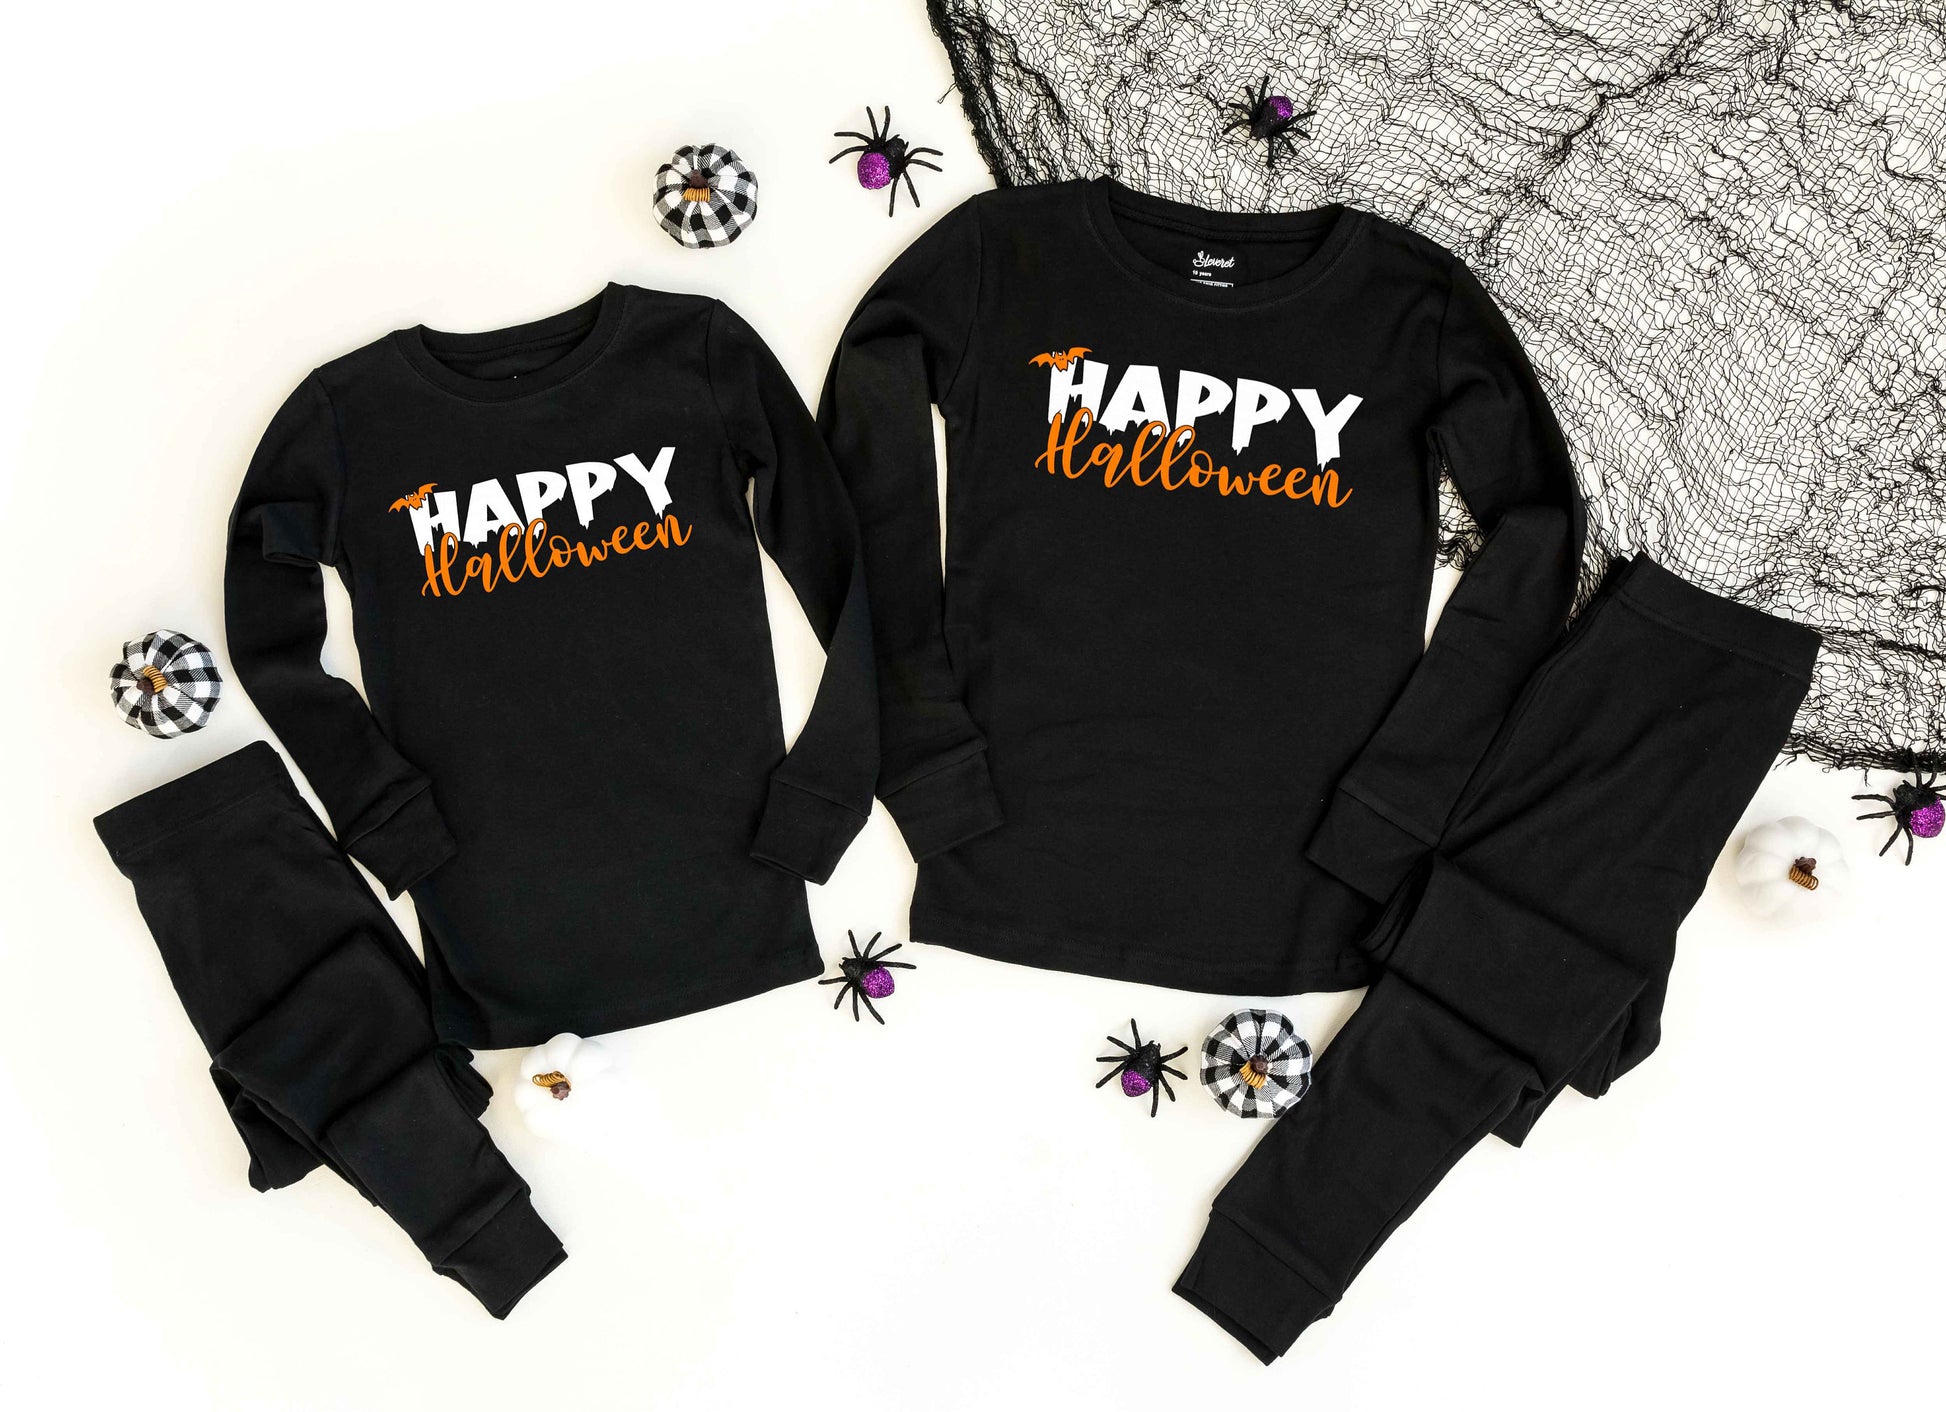 Happy Halloween v2 Solid Black Pajamas Solid Black- Halloween Pajama Sets - Kids and Adult Sizes